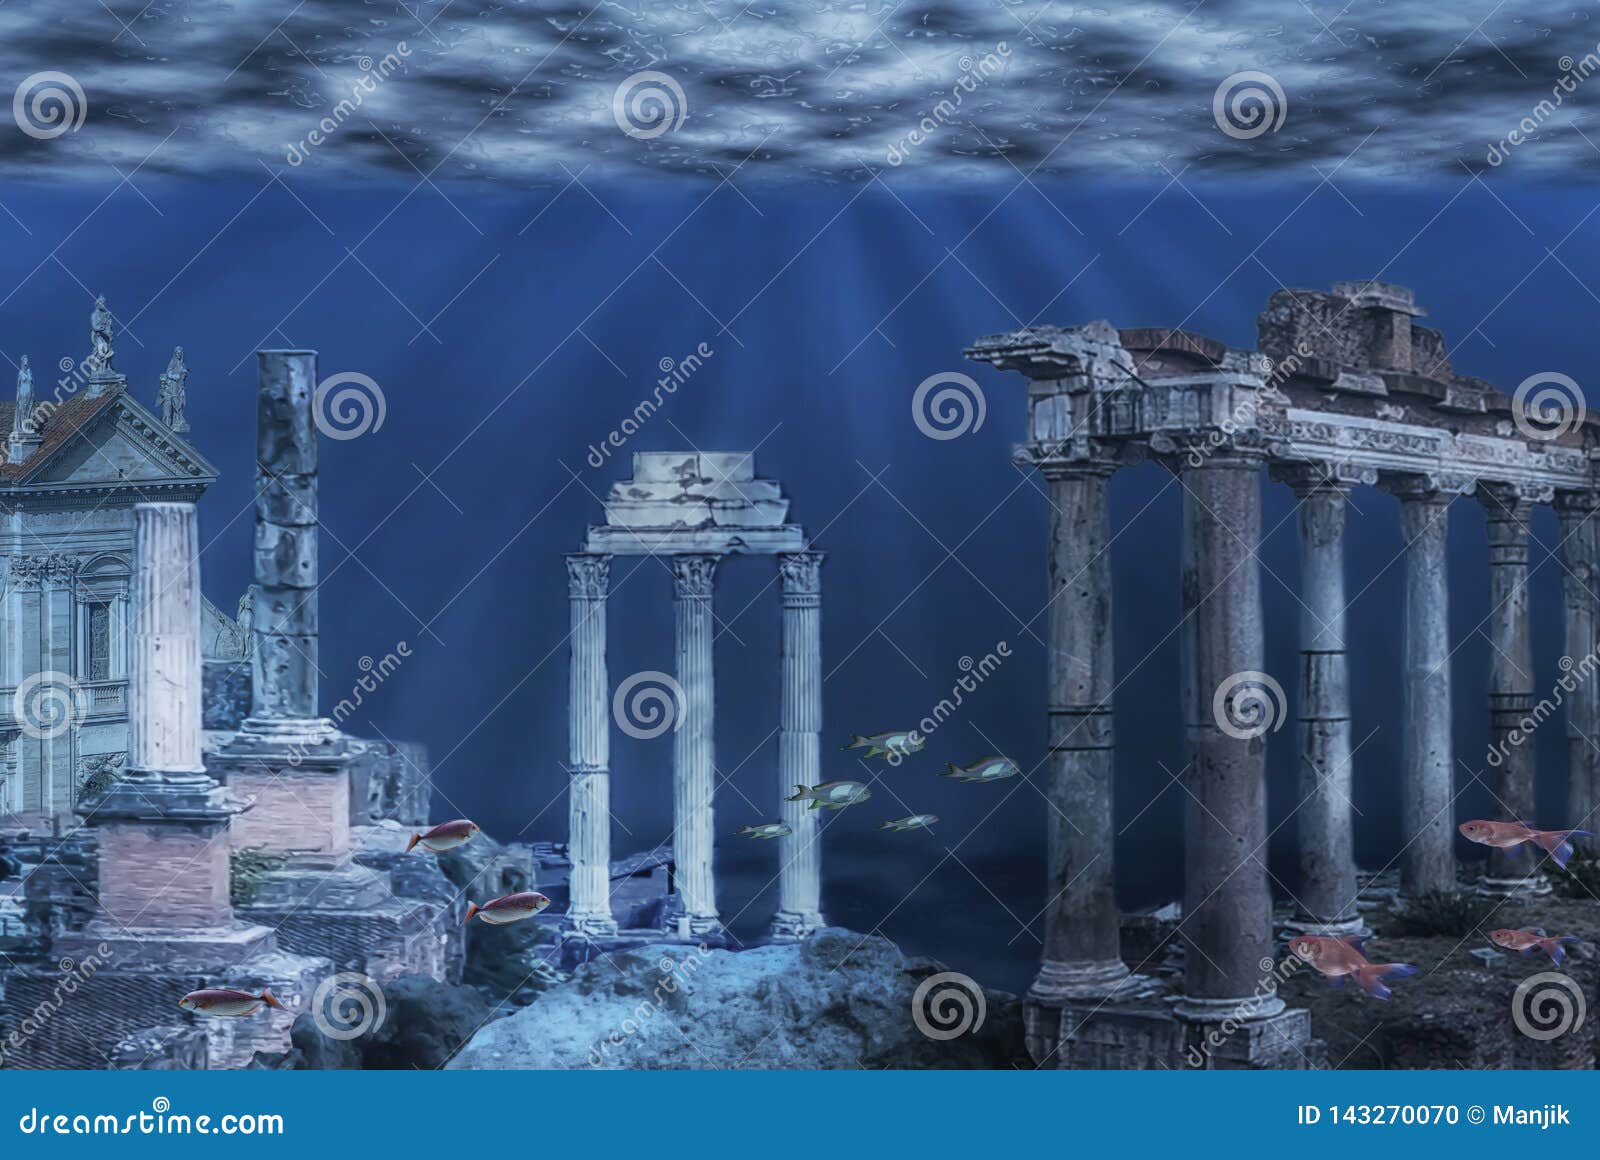 underwater ruins 